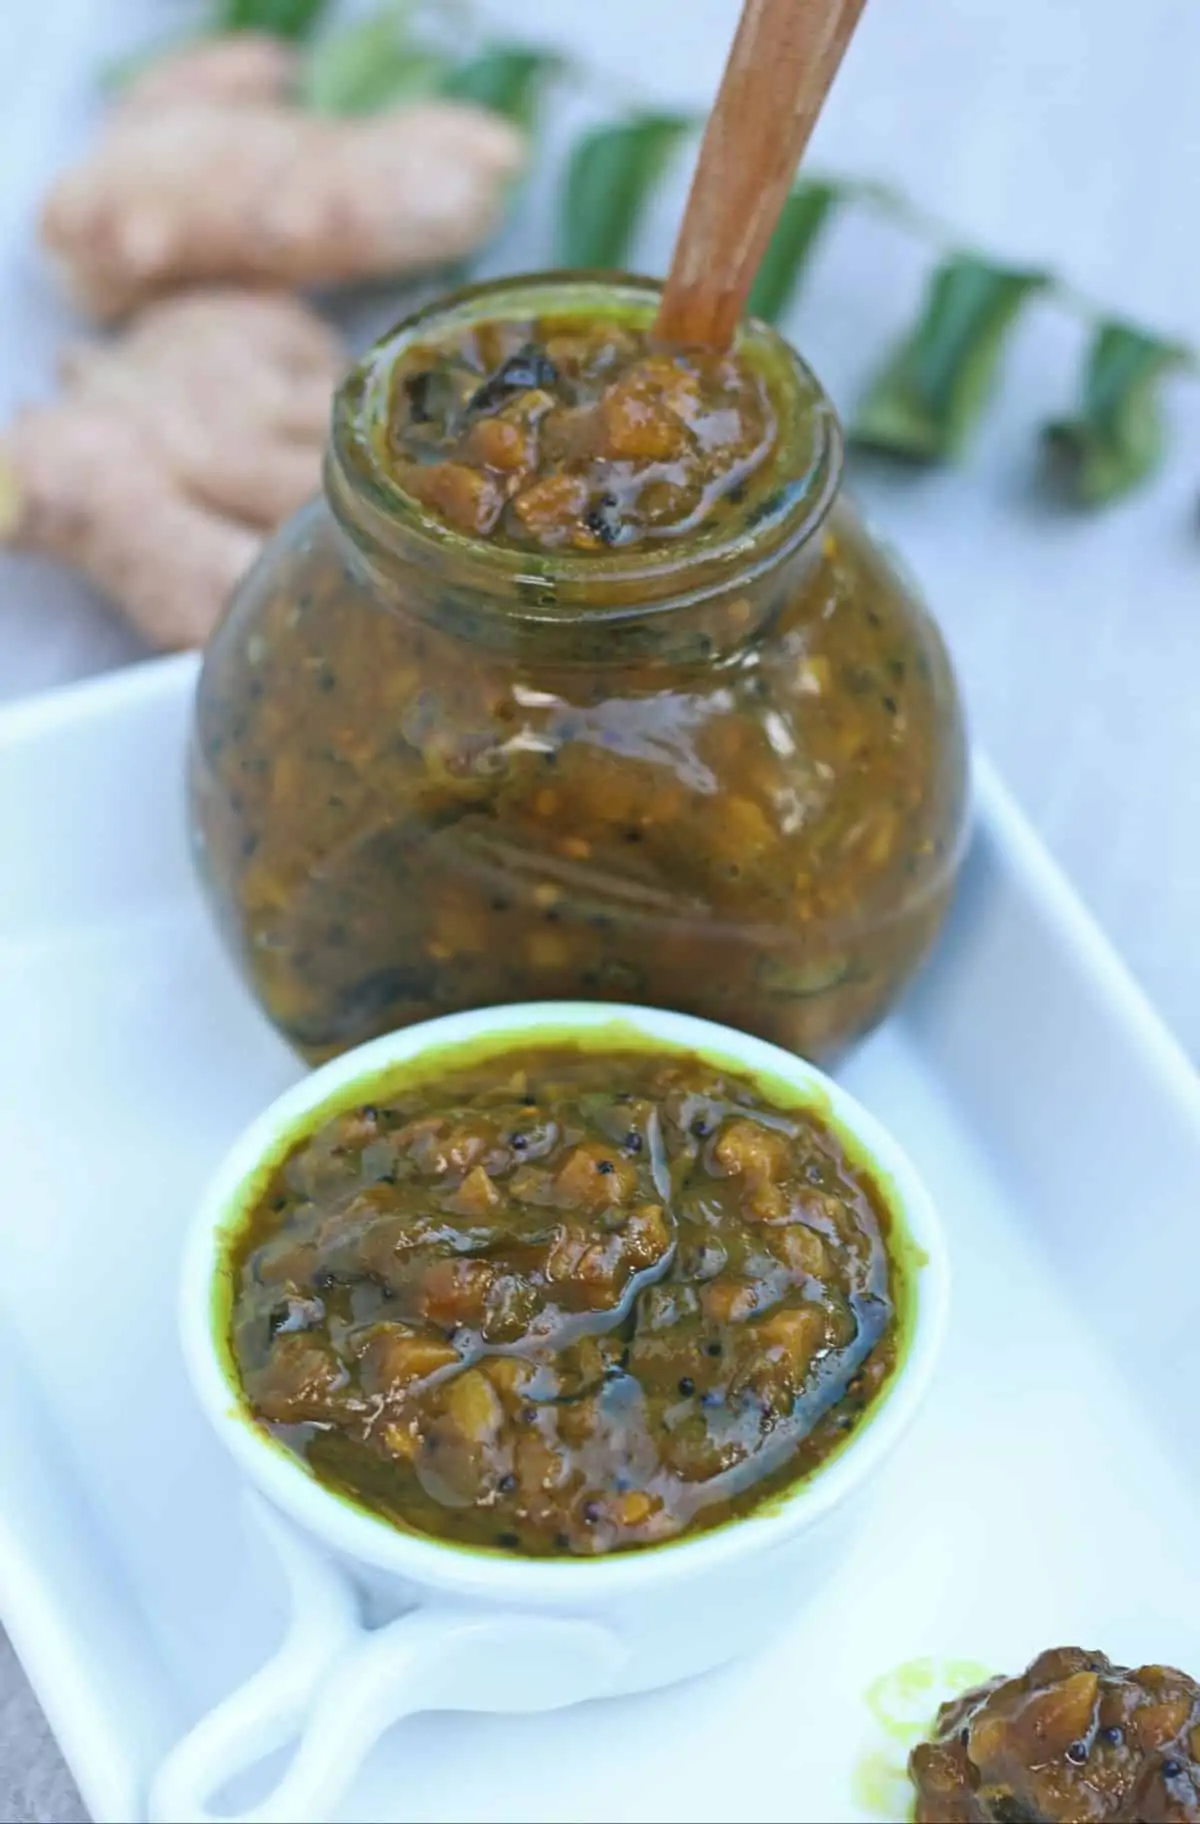 inji puli pickle in a jar and bowl